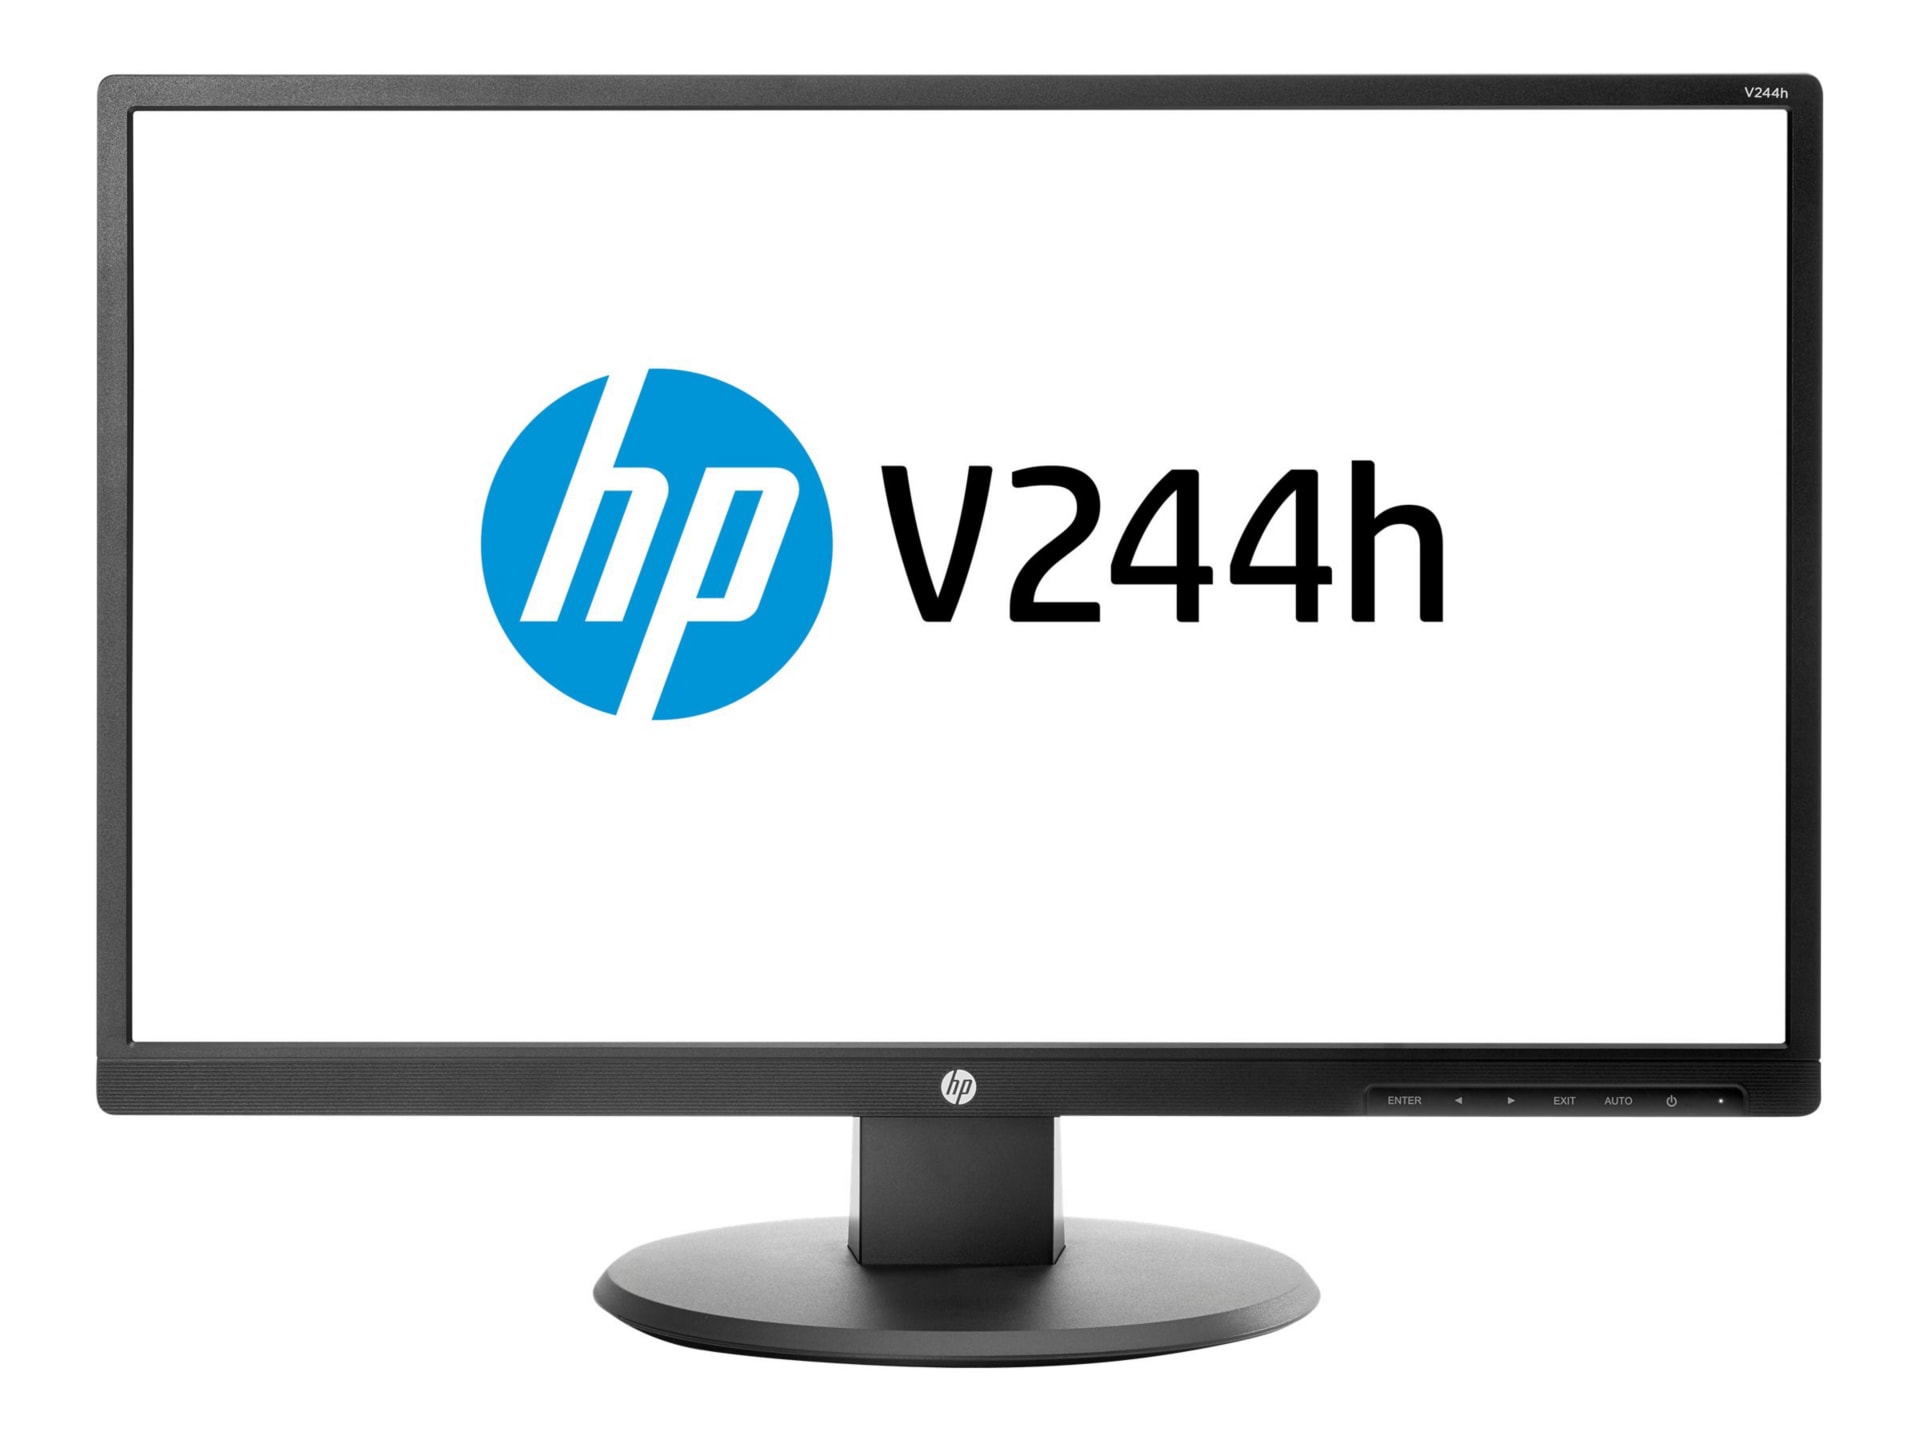 HP V244h - LED monitor - Full HD (1080p) - 23.8"